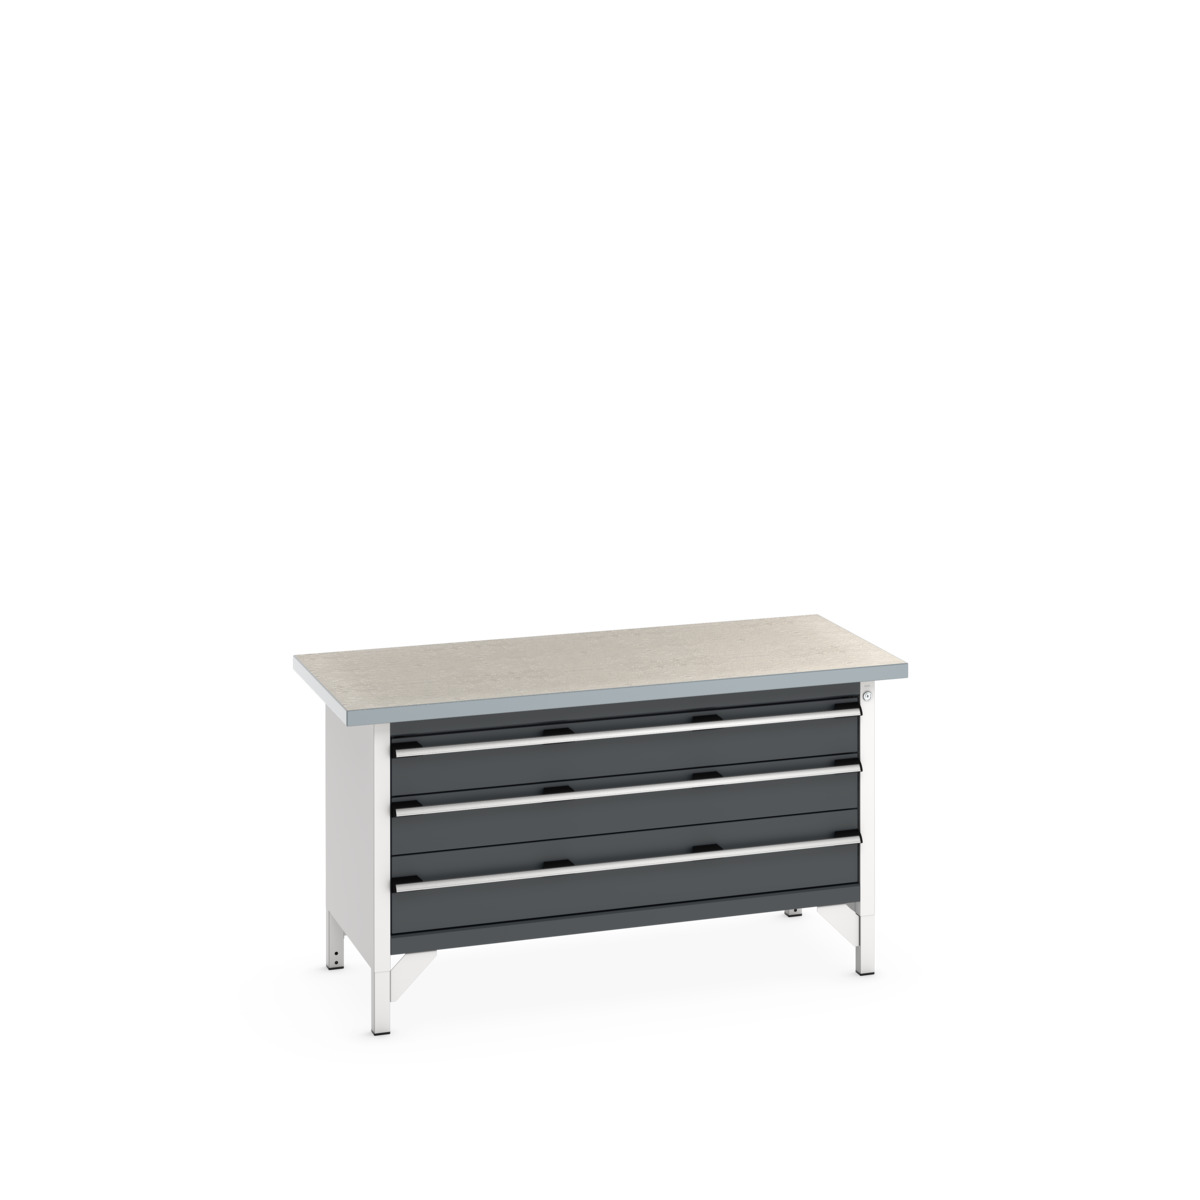 41002170. - cubio storage bench (lino)